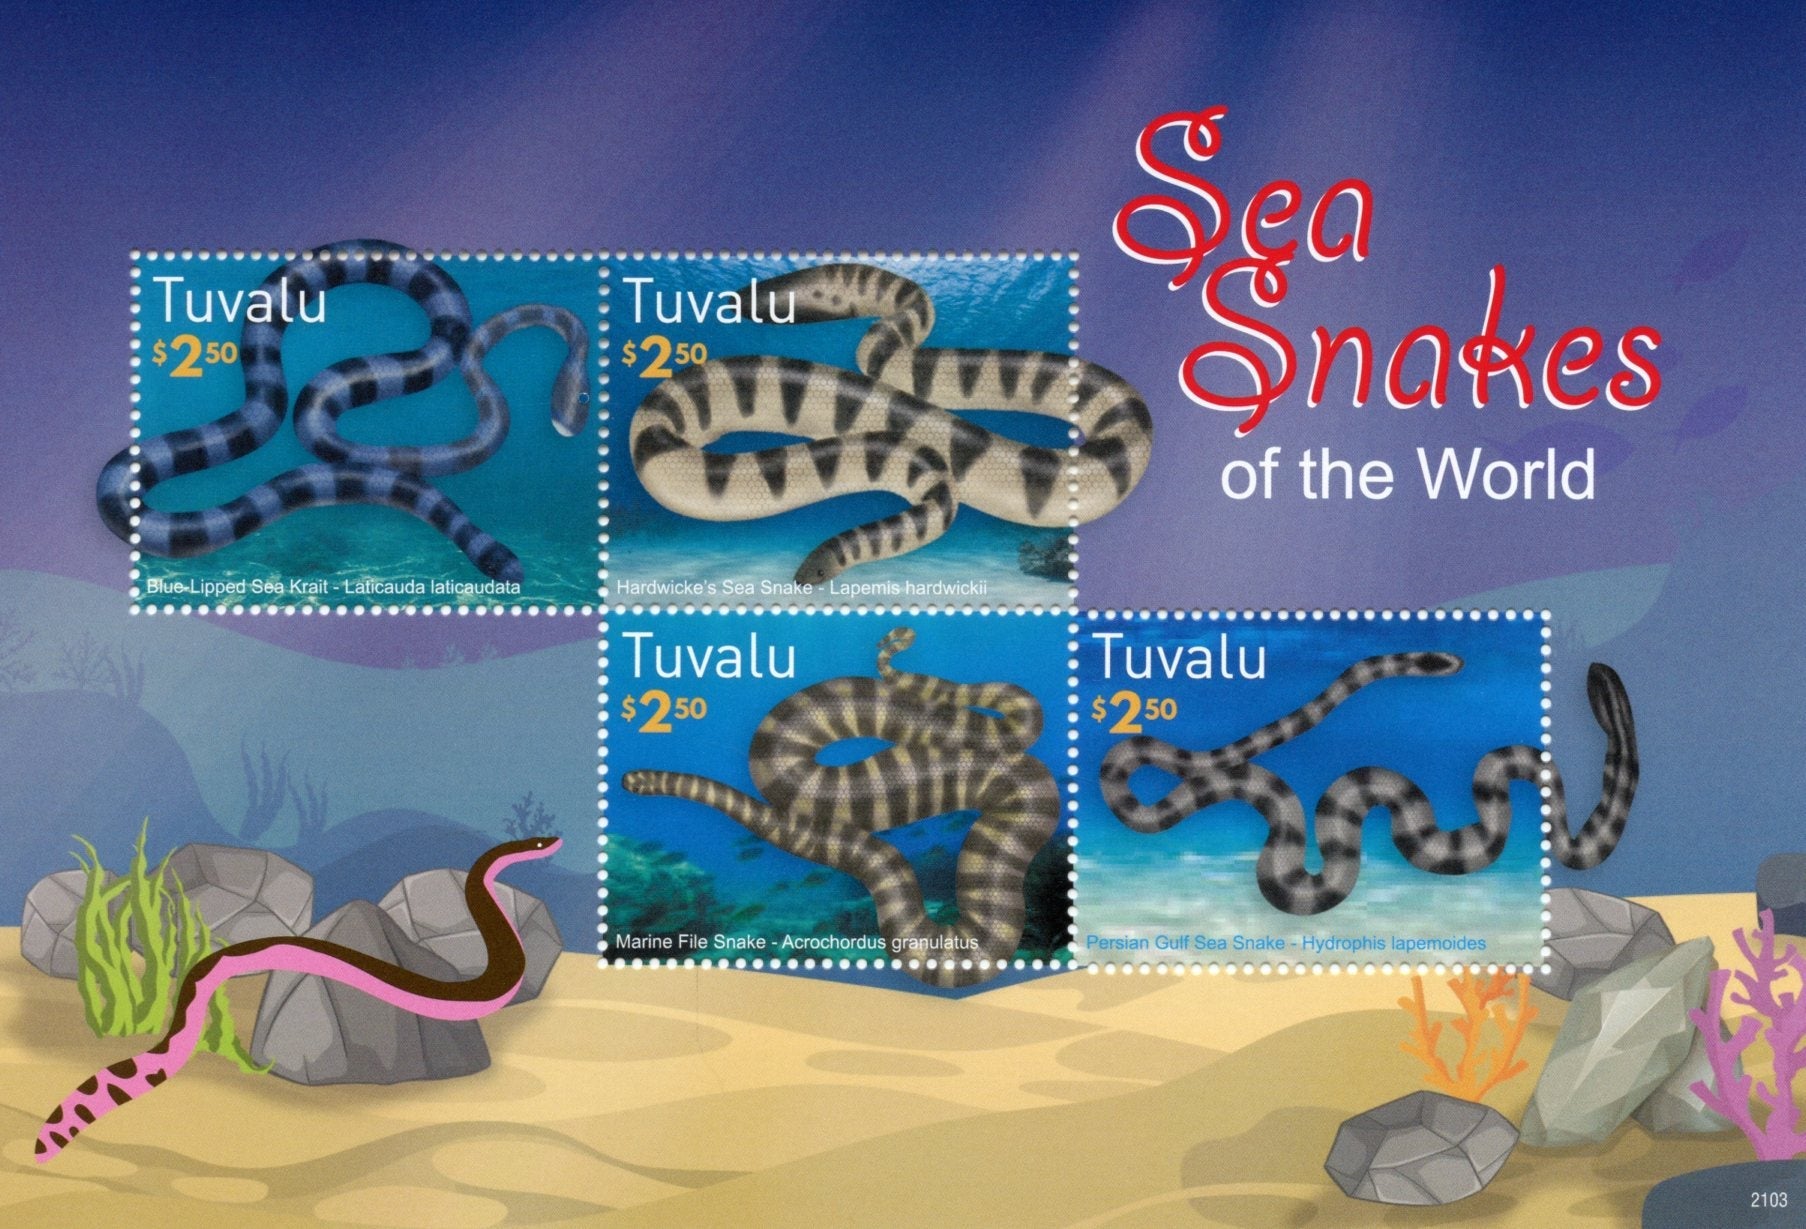 Tuvalu 2021 MNH Reptiles Stamps Sea Snakes of World Krait File Snake 4v M/S